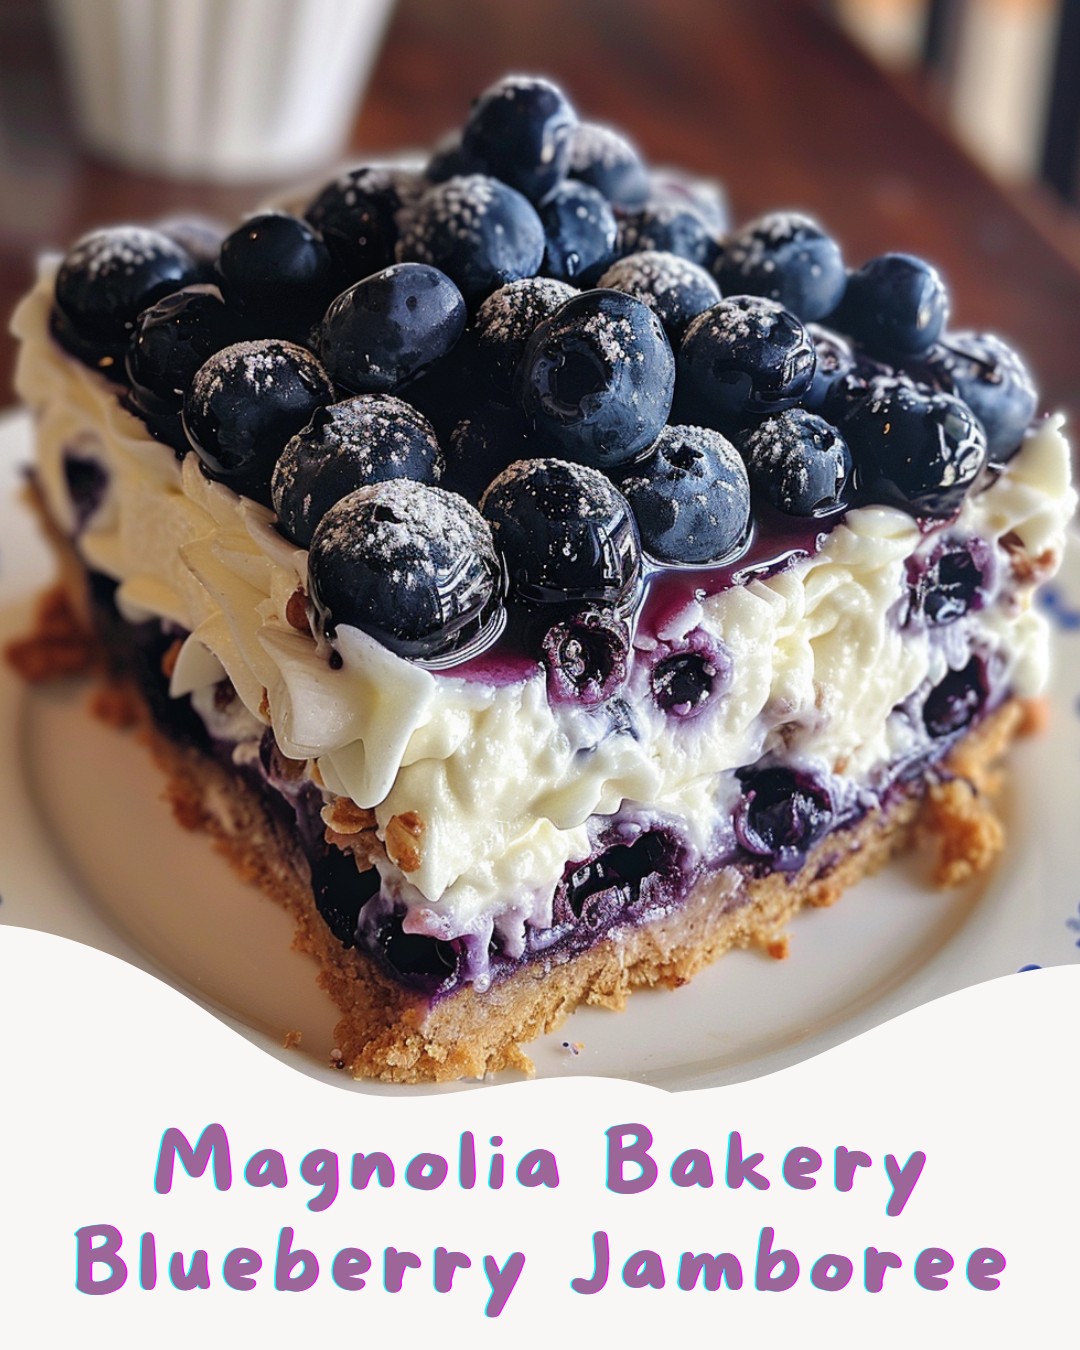 Magnolia Bakery's Blueberry Jamboree - A Layered Dessert Masterpiece